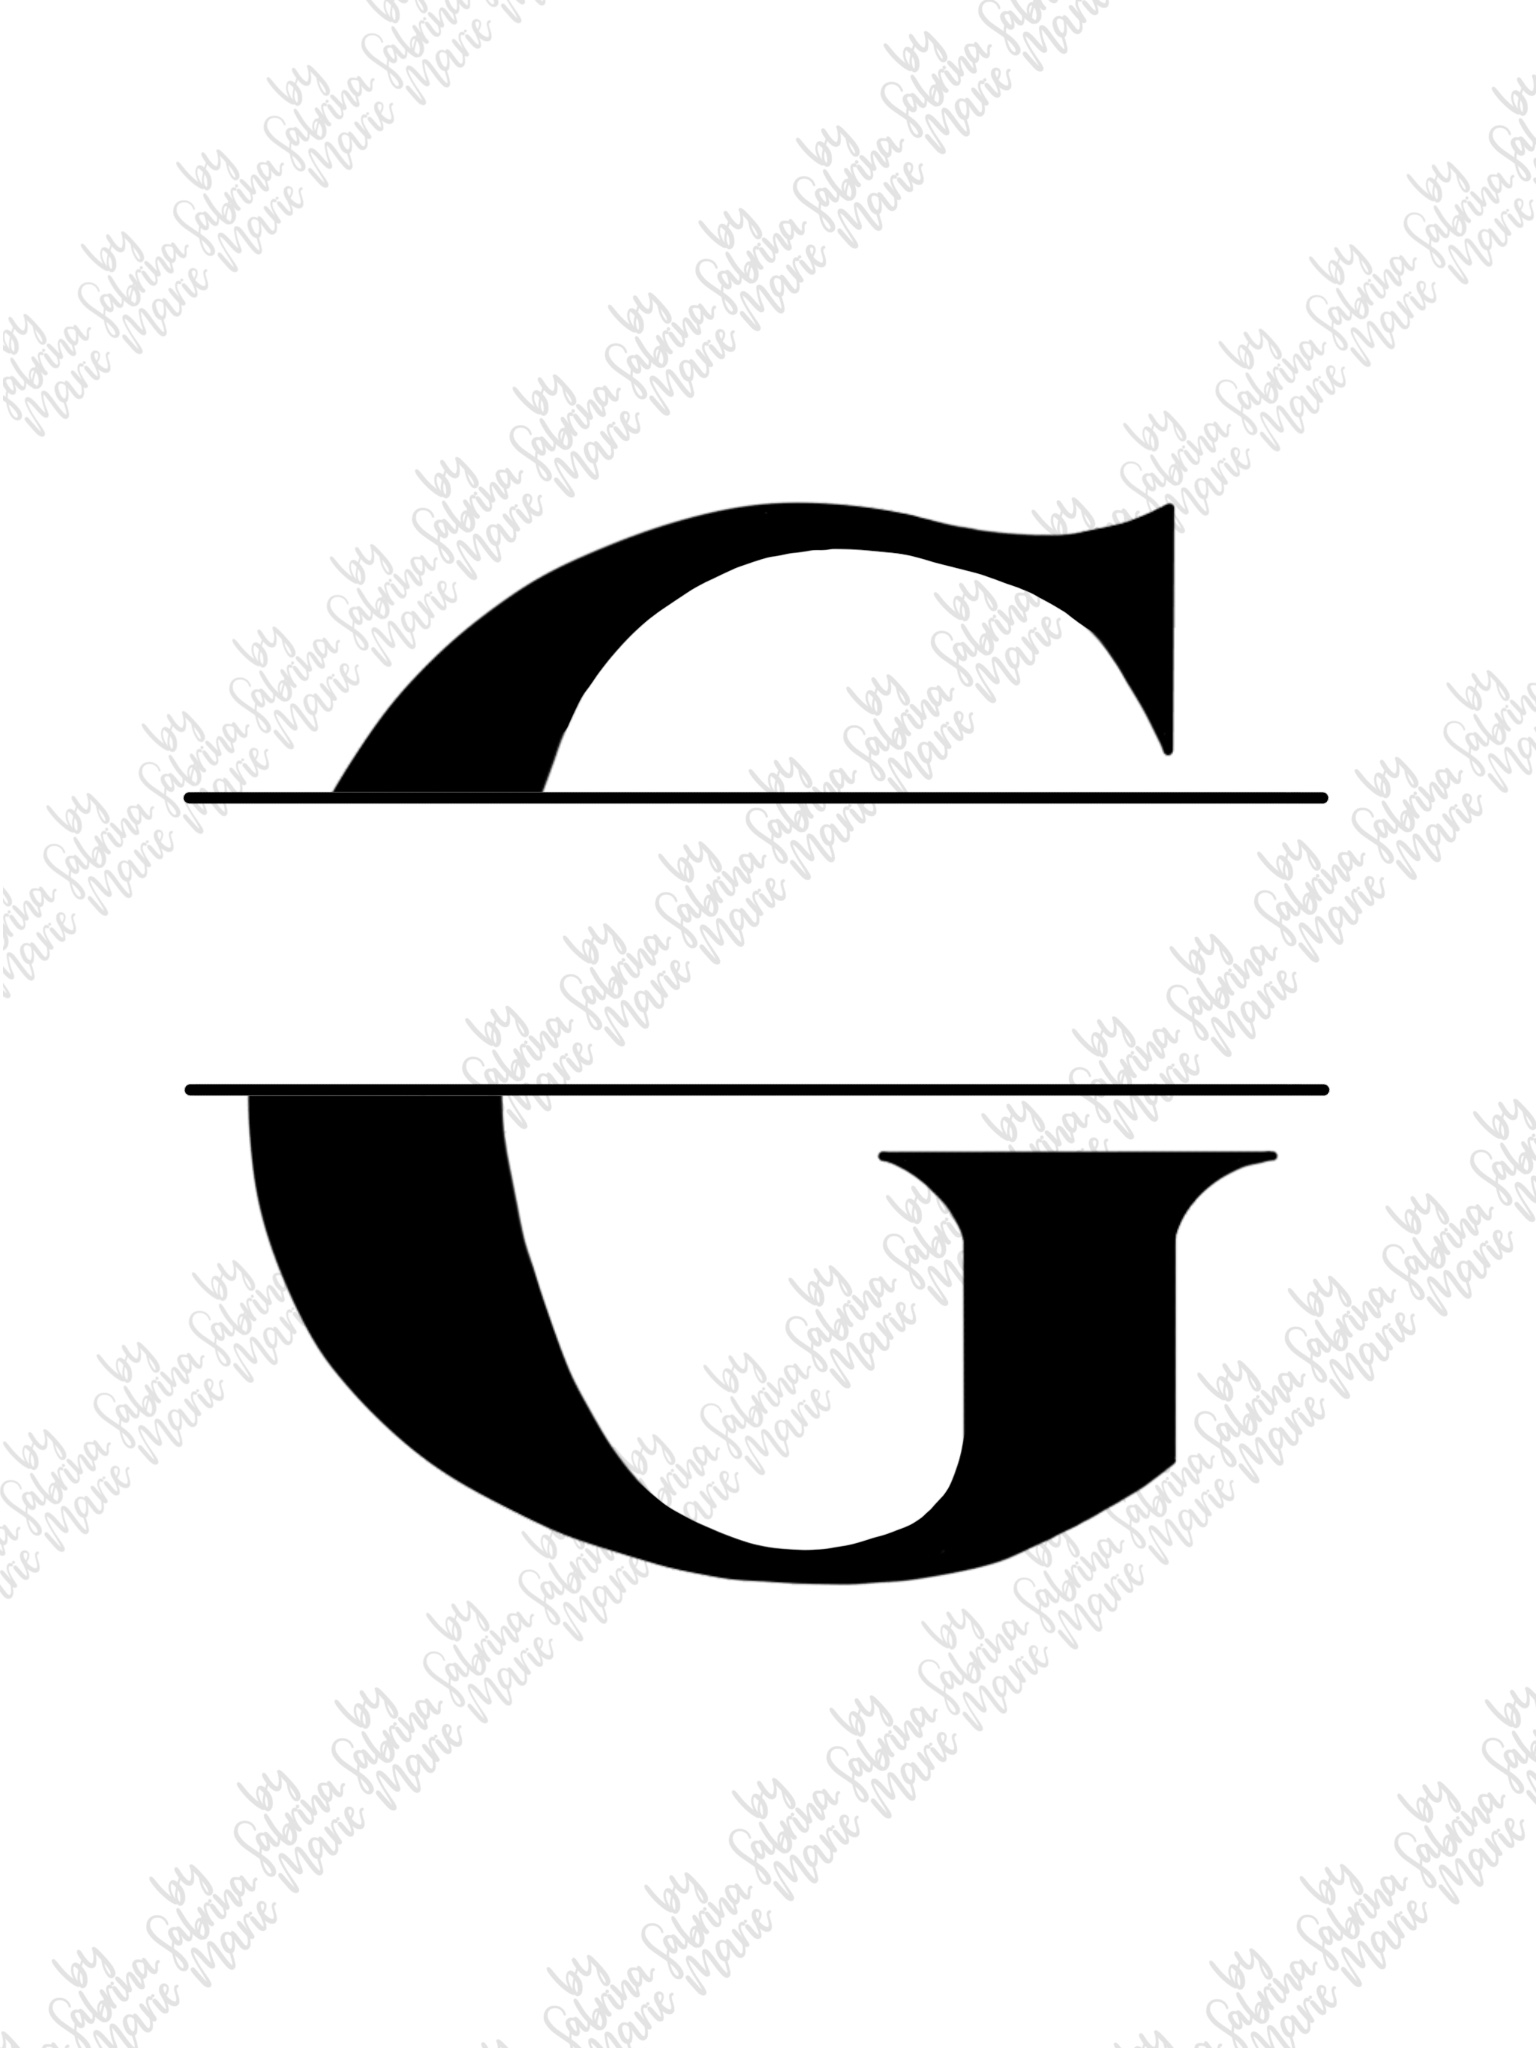 Free Monogram G Svg - 1139+ Amazing SVG File - Free SVG Images